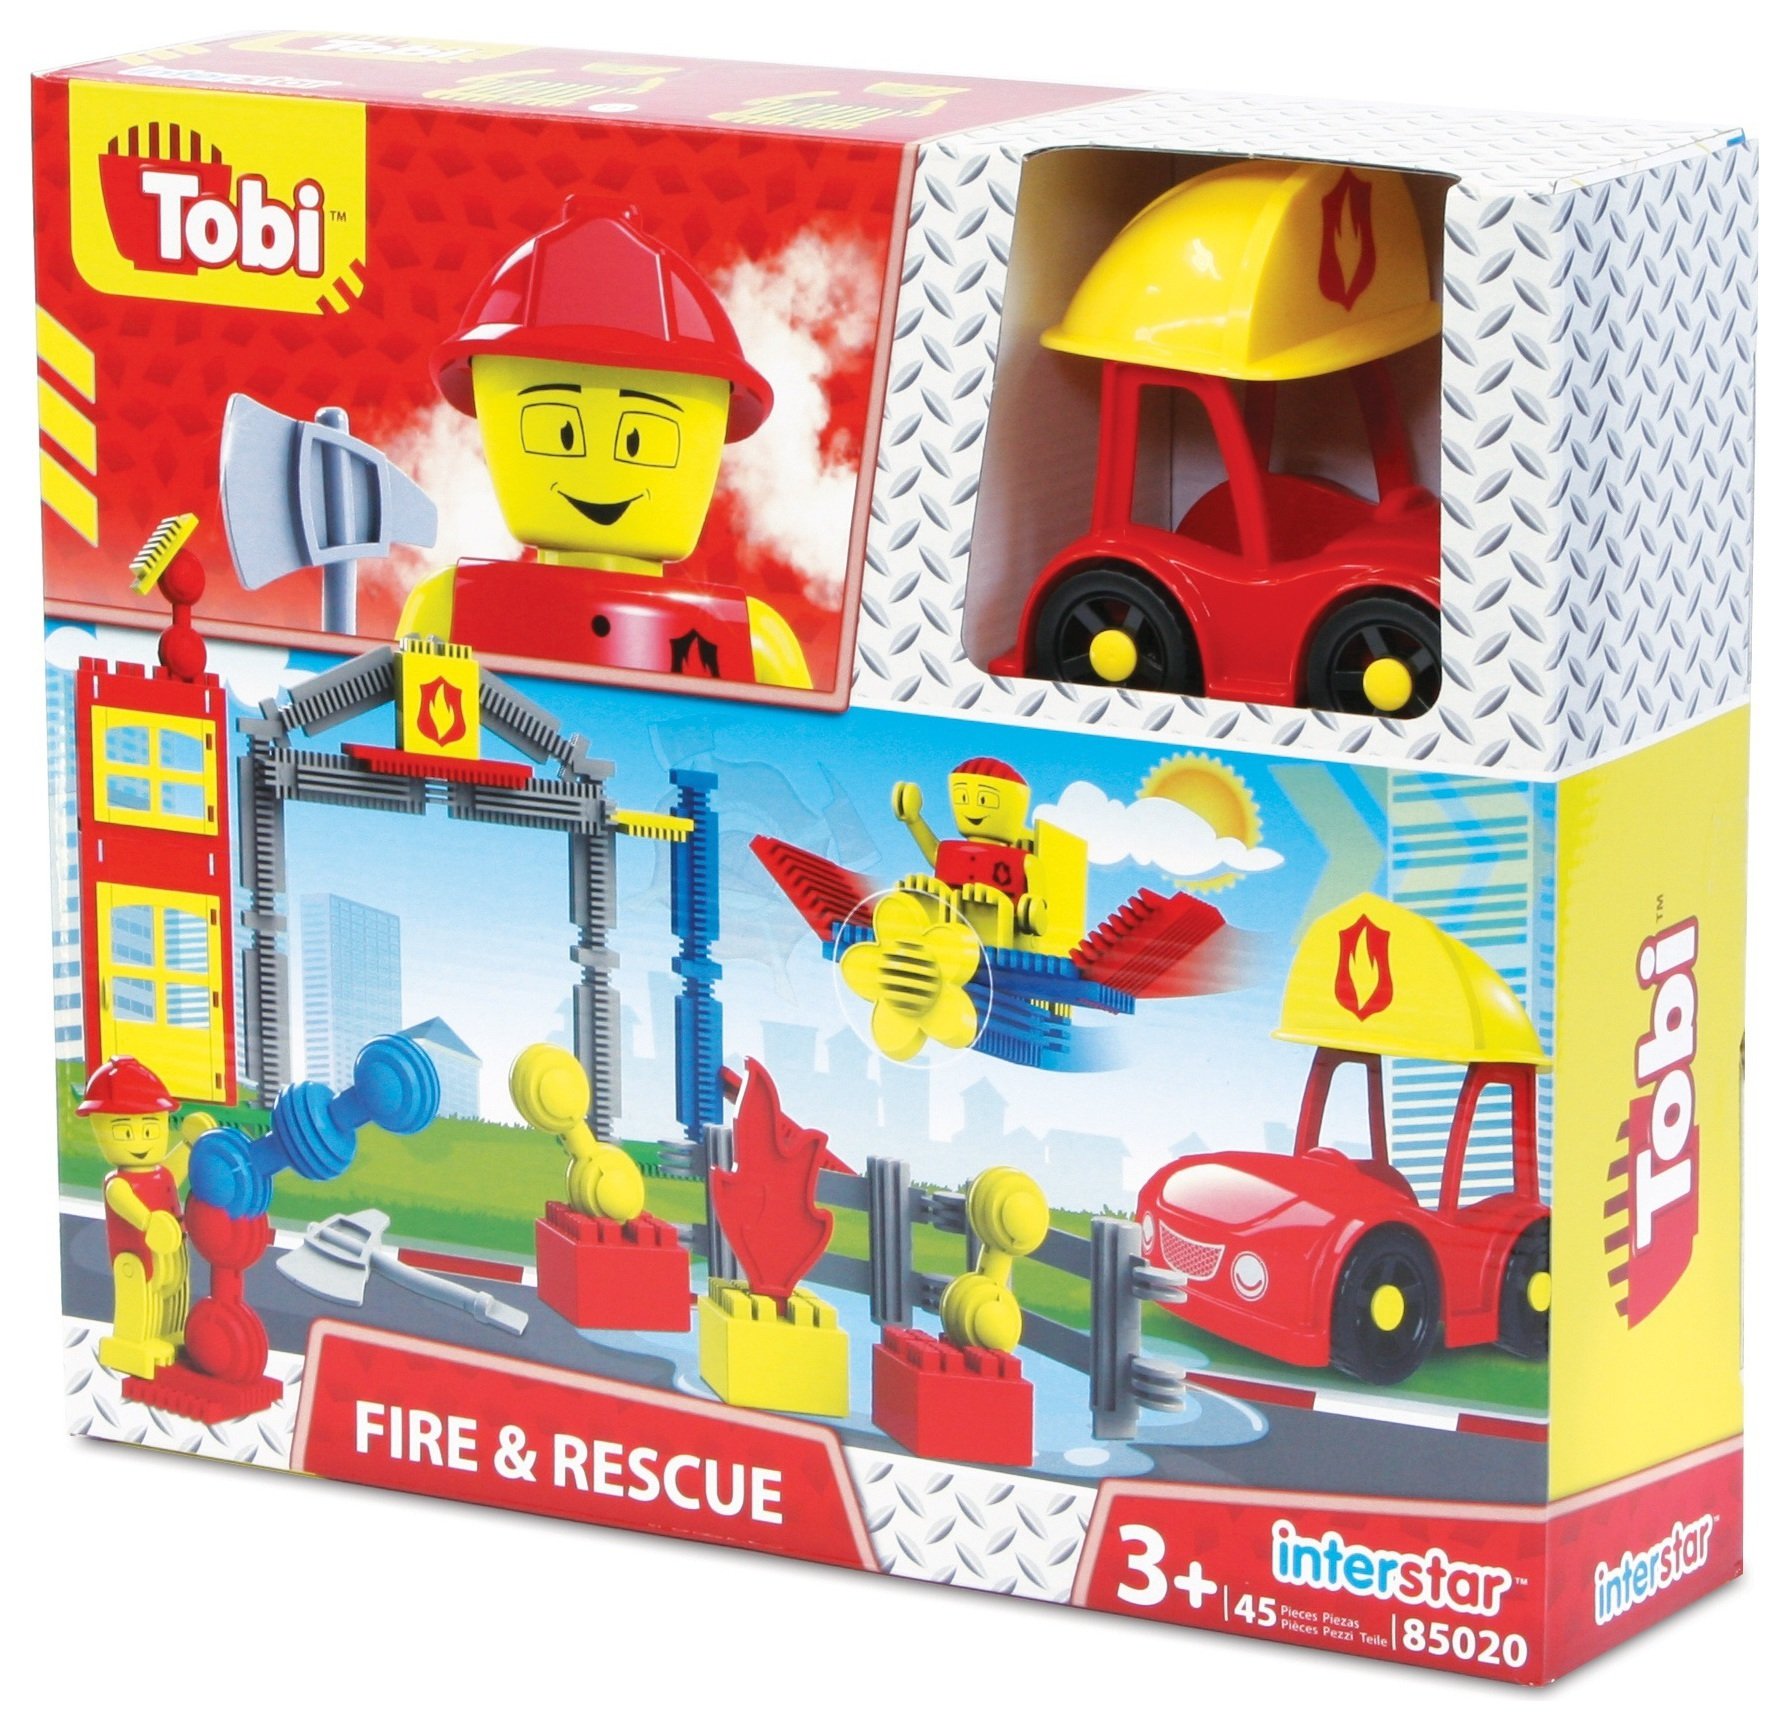 Interstar Tobi Fire 'N' Rescue Construction Set review